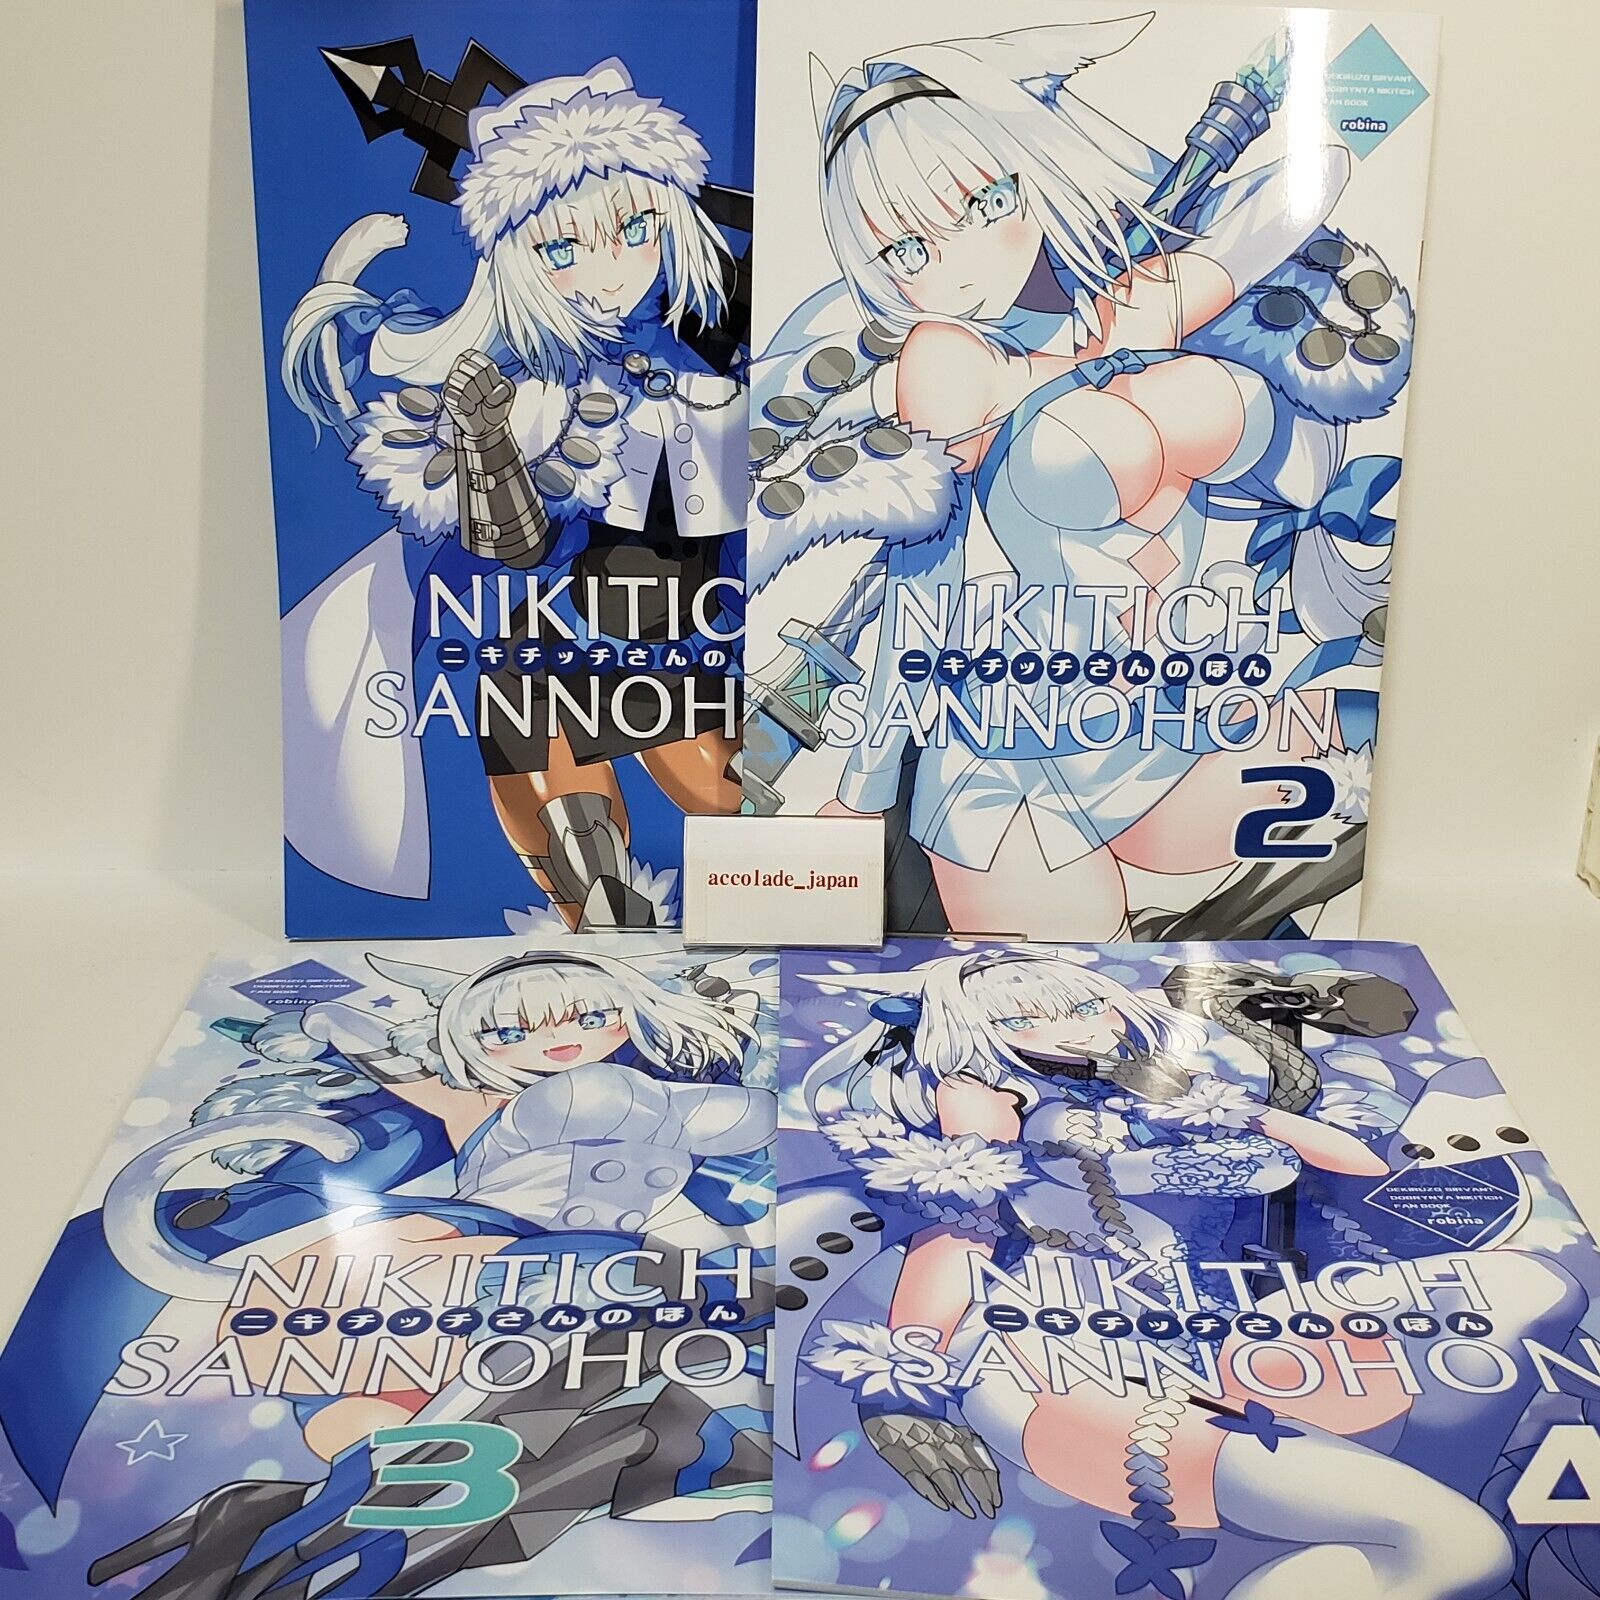 Nikitich Sannohon Vol.1 to 4 Fate/Grand Order Art Book robina go round Doujinshi